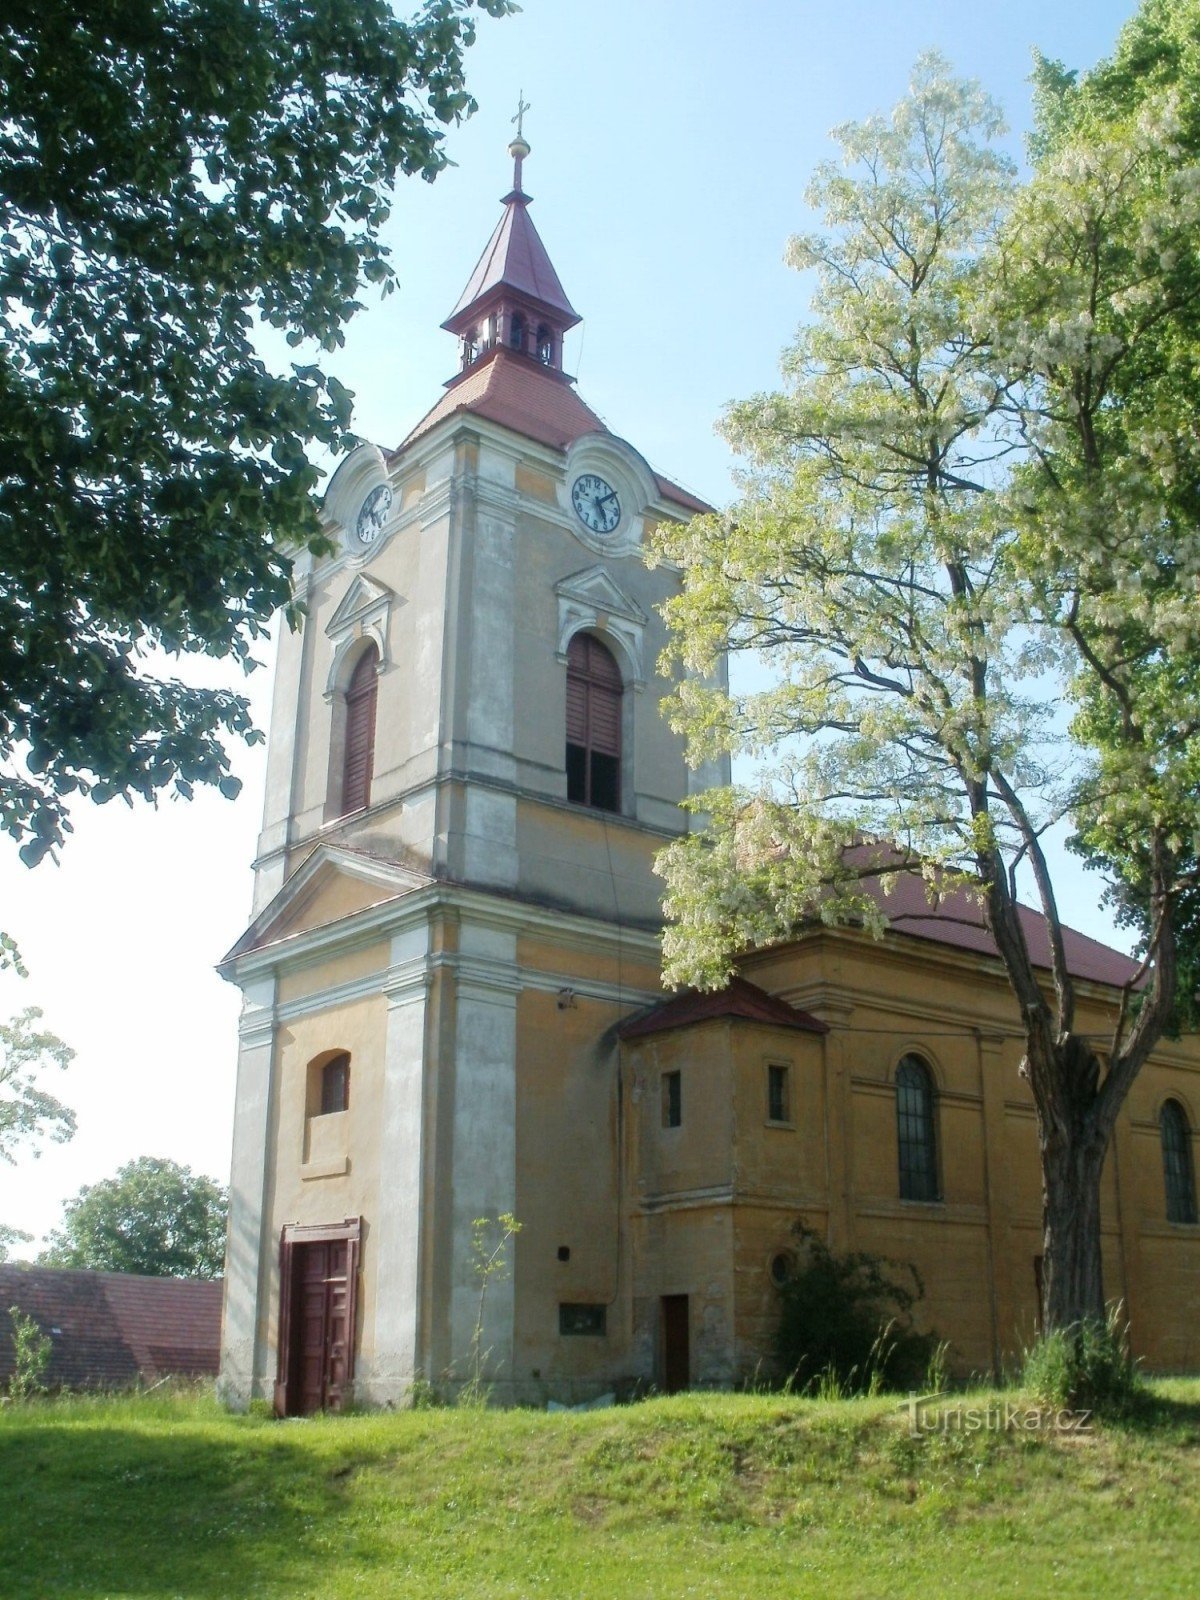 Jeníkovice - cerkev sv. Petra in Pavla